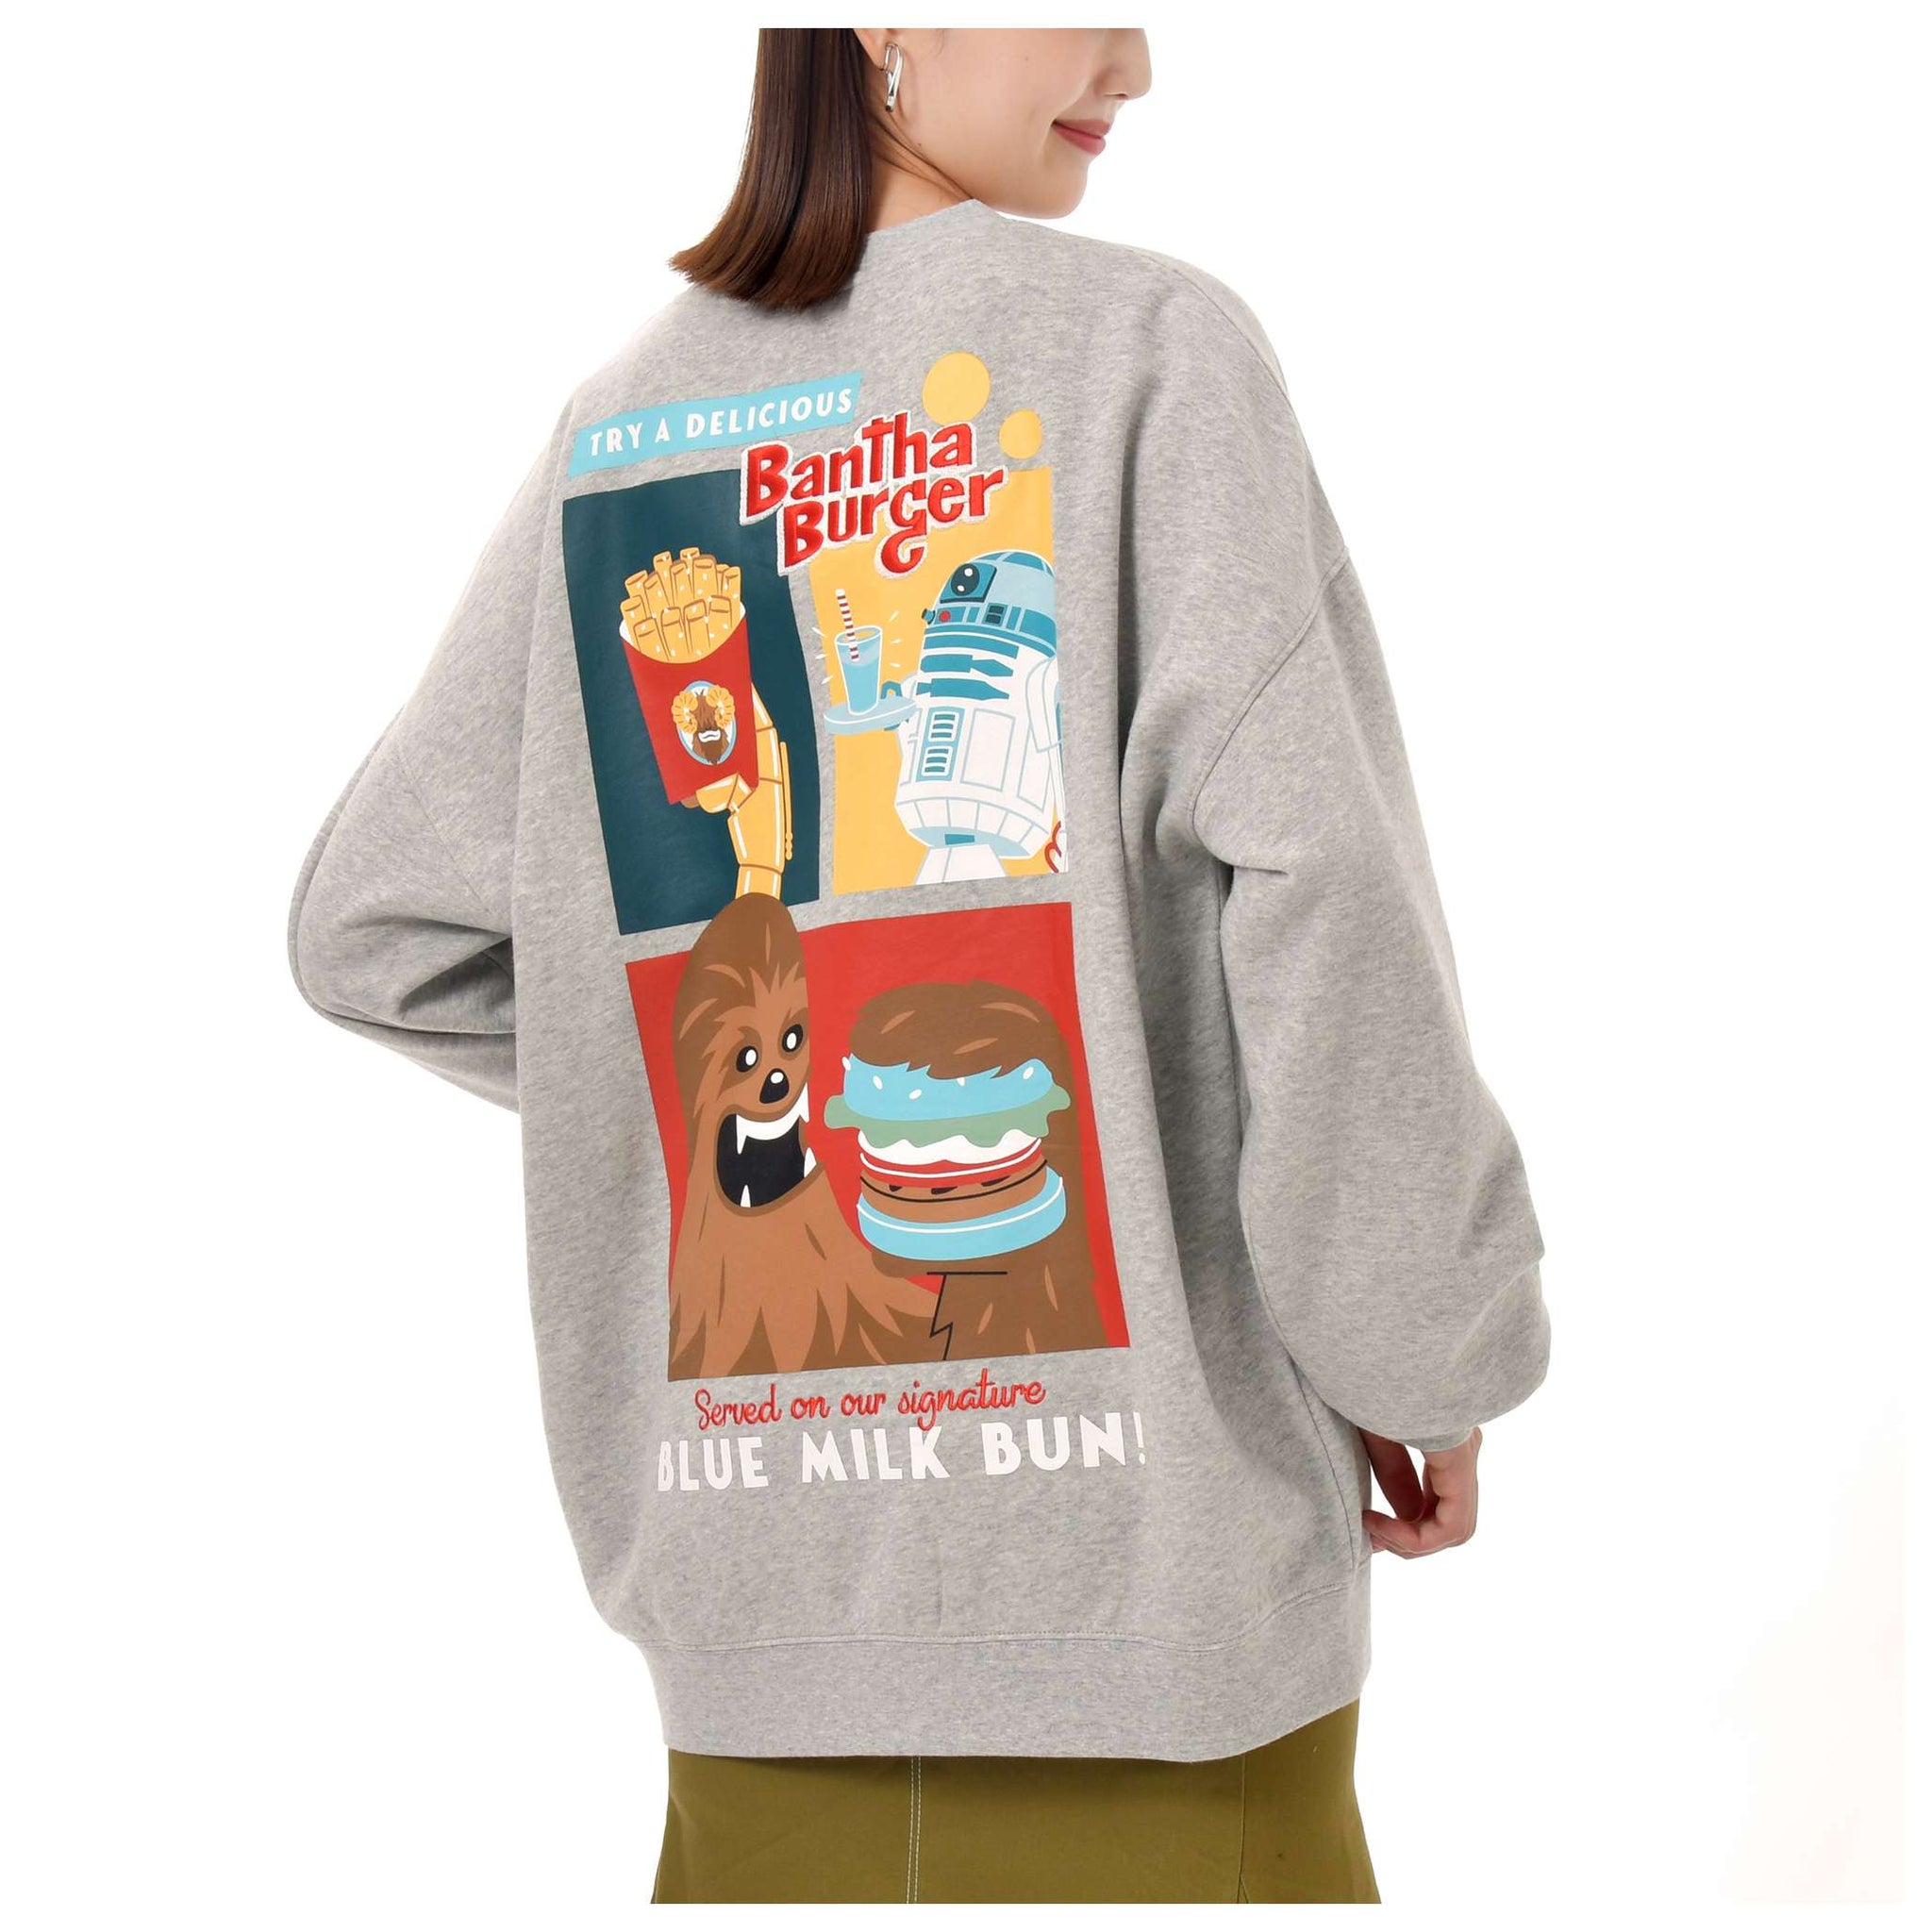 Disney Store Star Wars Bantha Burger L Hooded Sweatshirt